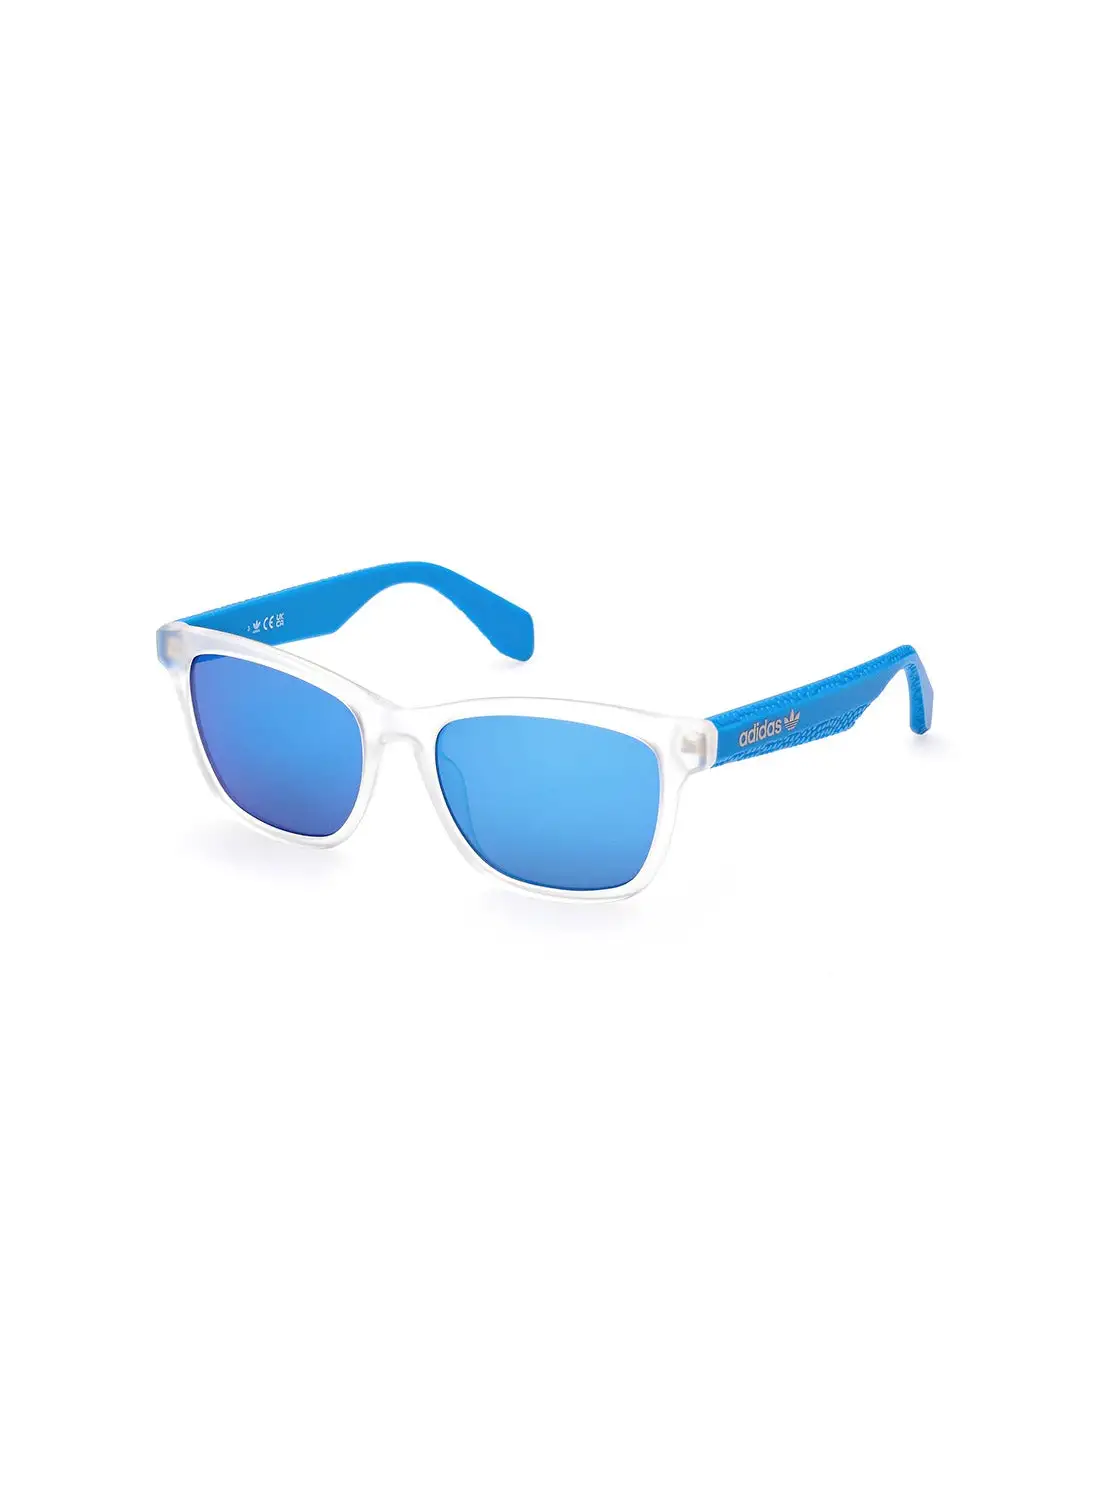 Adidas Unisex UV Protection Navigator Sunglasses - OR006926X54 - Lens Size: 54 Mm